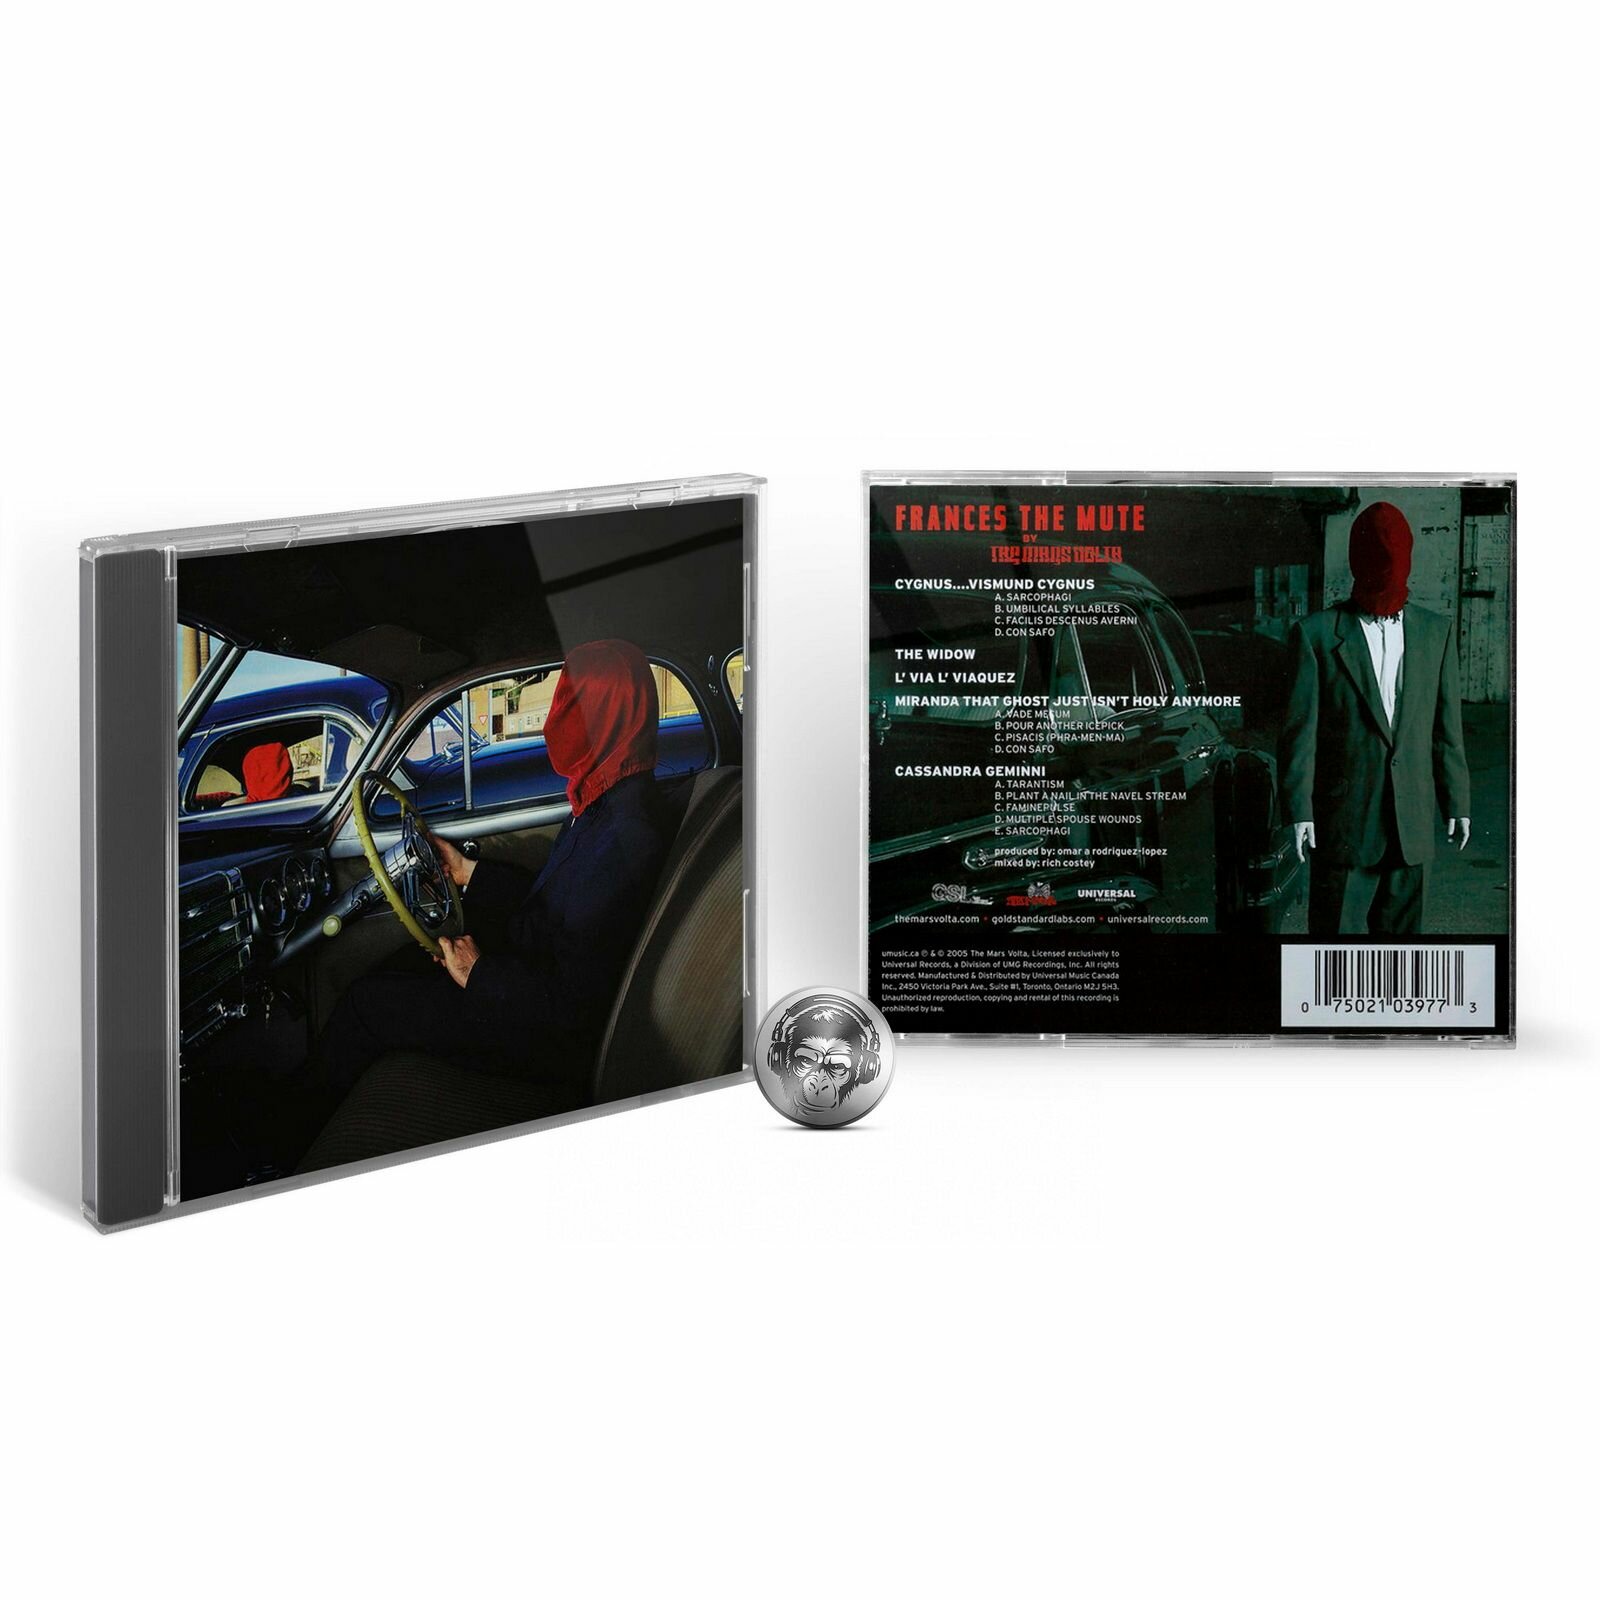 The Mars Volta - Frances The Mute (1CD) 2005 Universal, Jewel Аудио диск